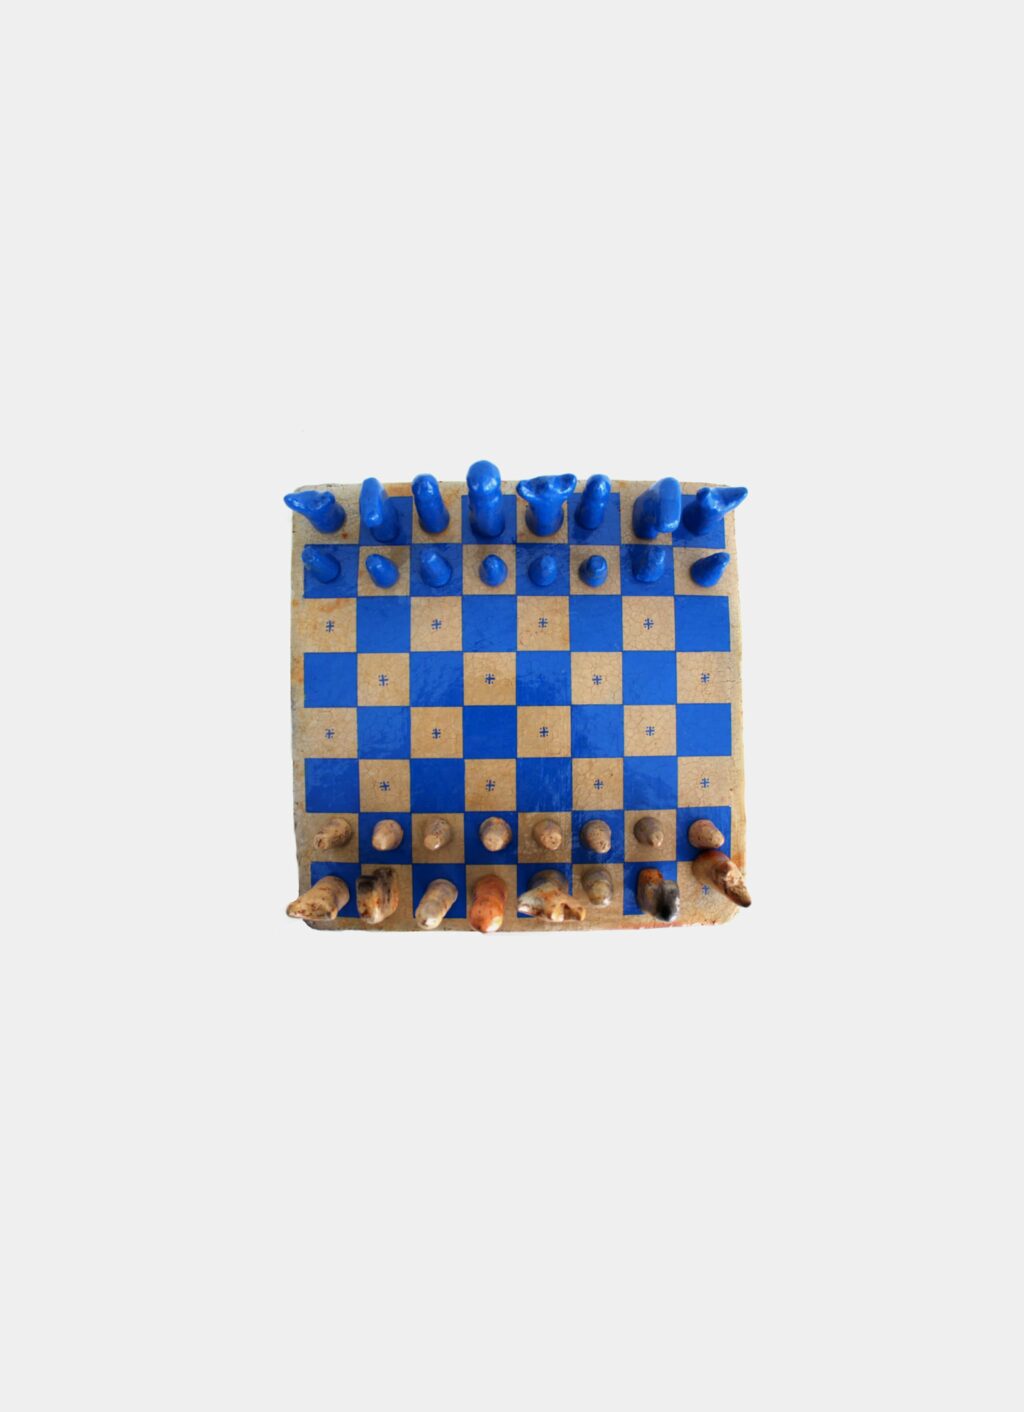 Flayou - Chich-Bich - Terracotta - Chess - Special edition - Neon blue